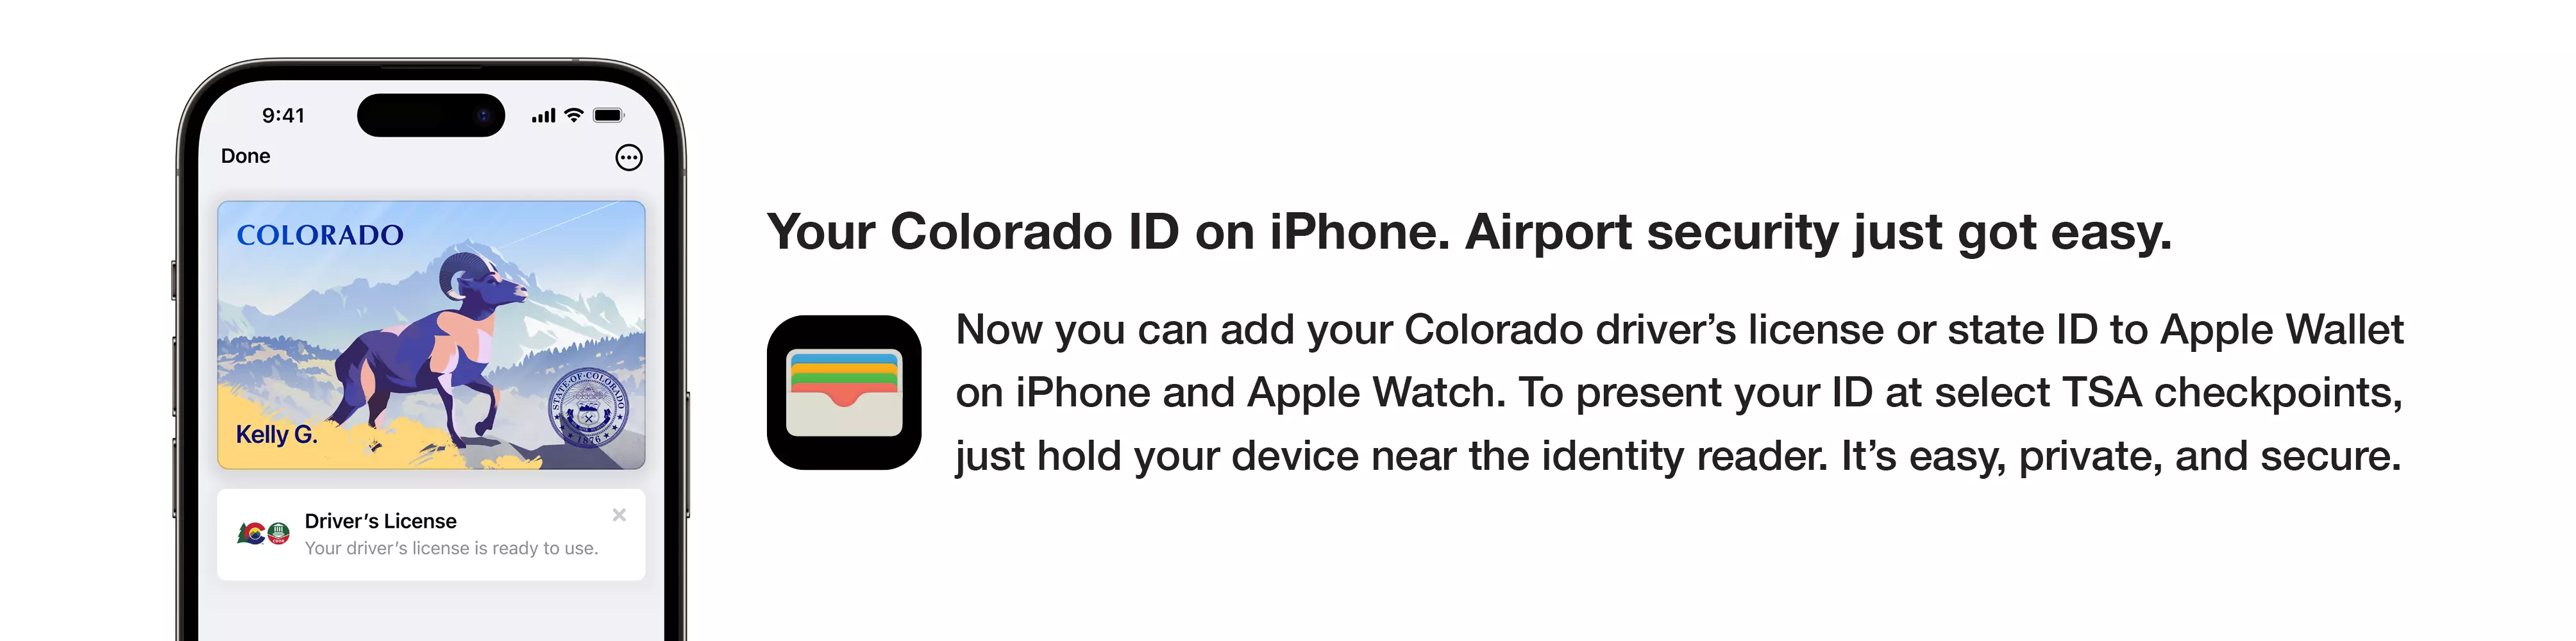 Colorado ID on iPhone web banner